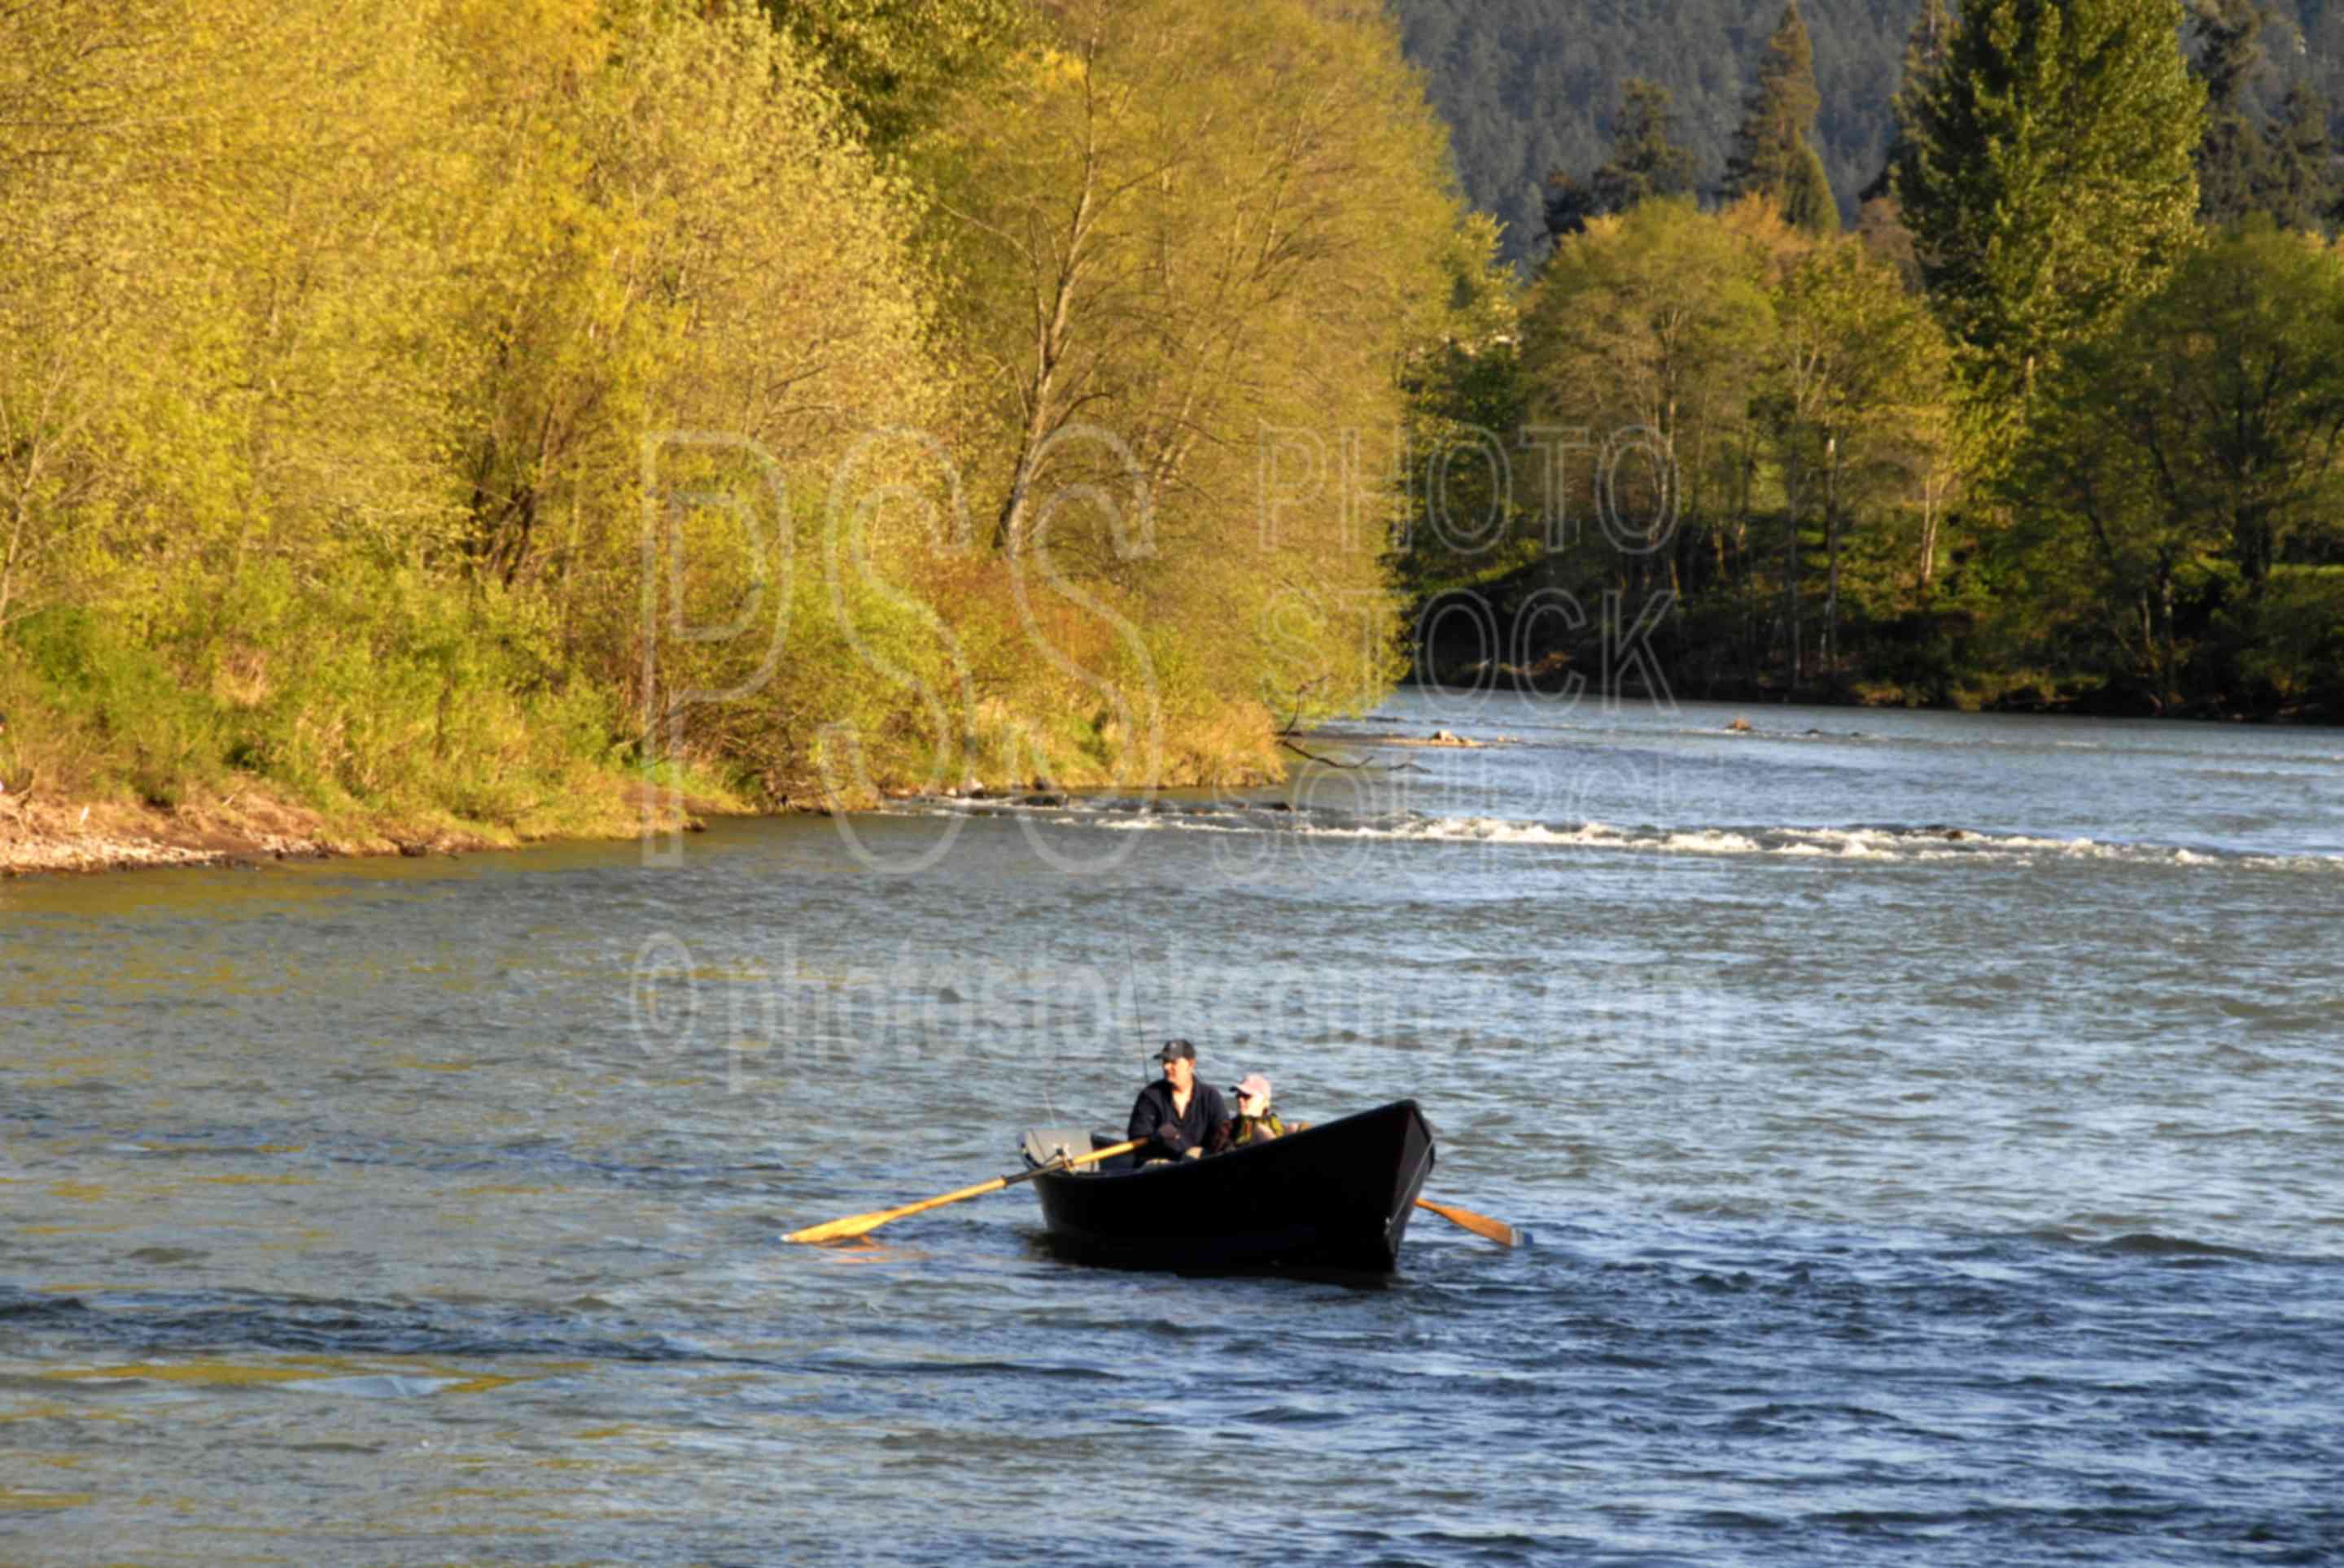 River Boat,boat,fishing,fishing boat,river,willamette river,drift boat,row boat,lakes rivers